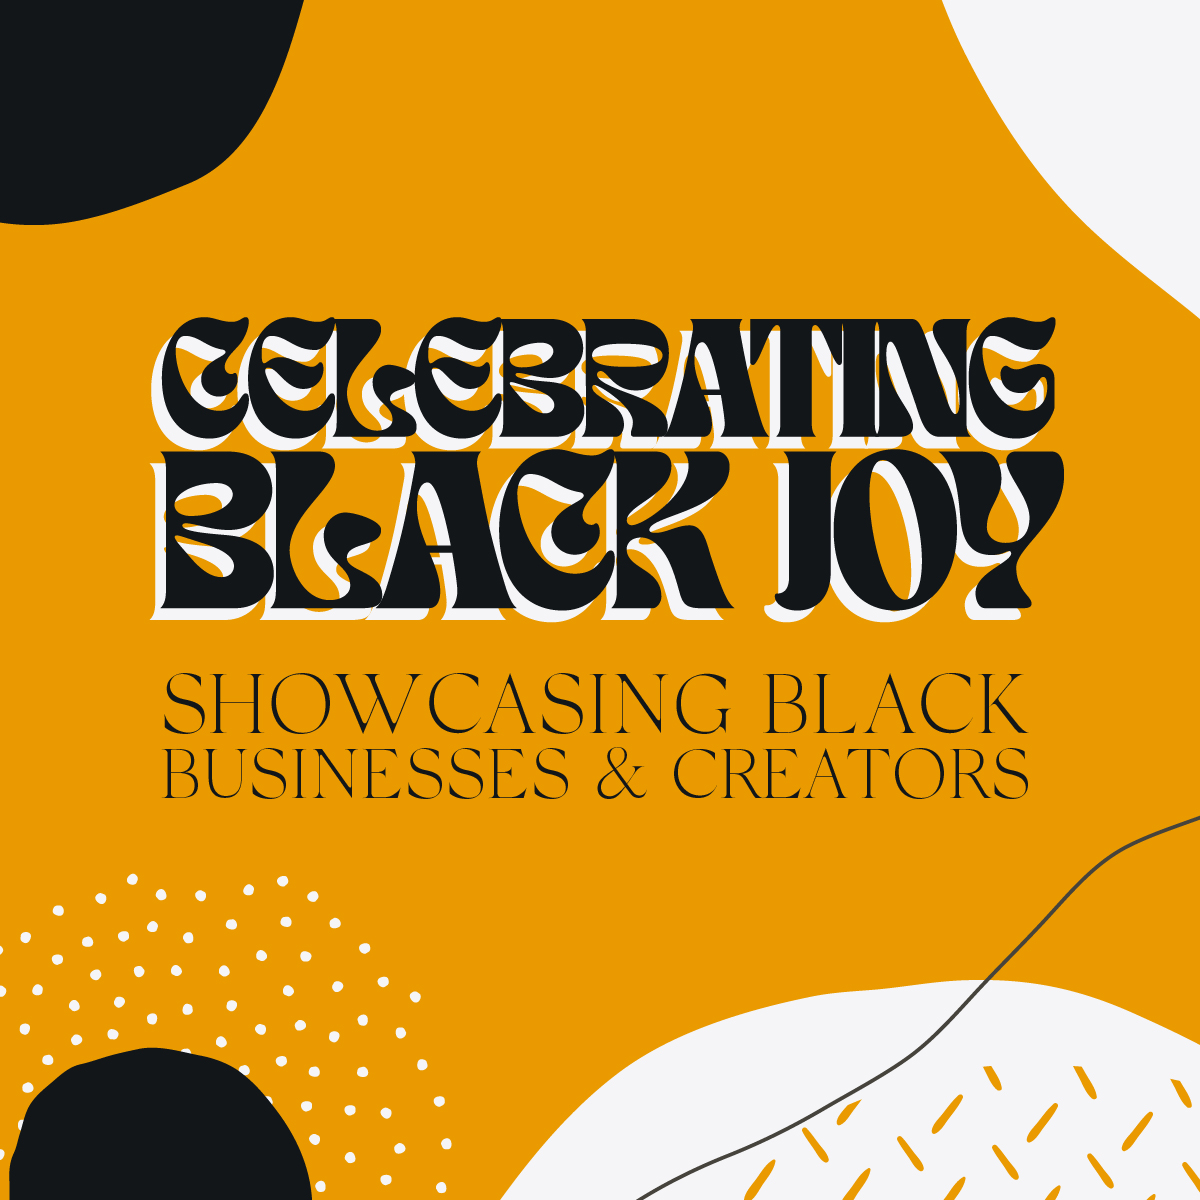 Text says Celebrating Black Joy Showcasing Black Businesses and Creators